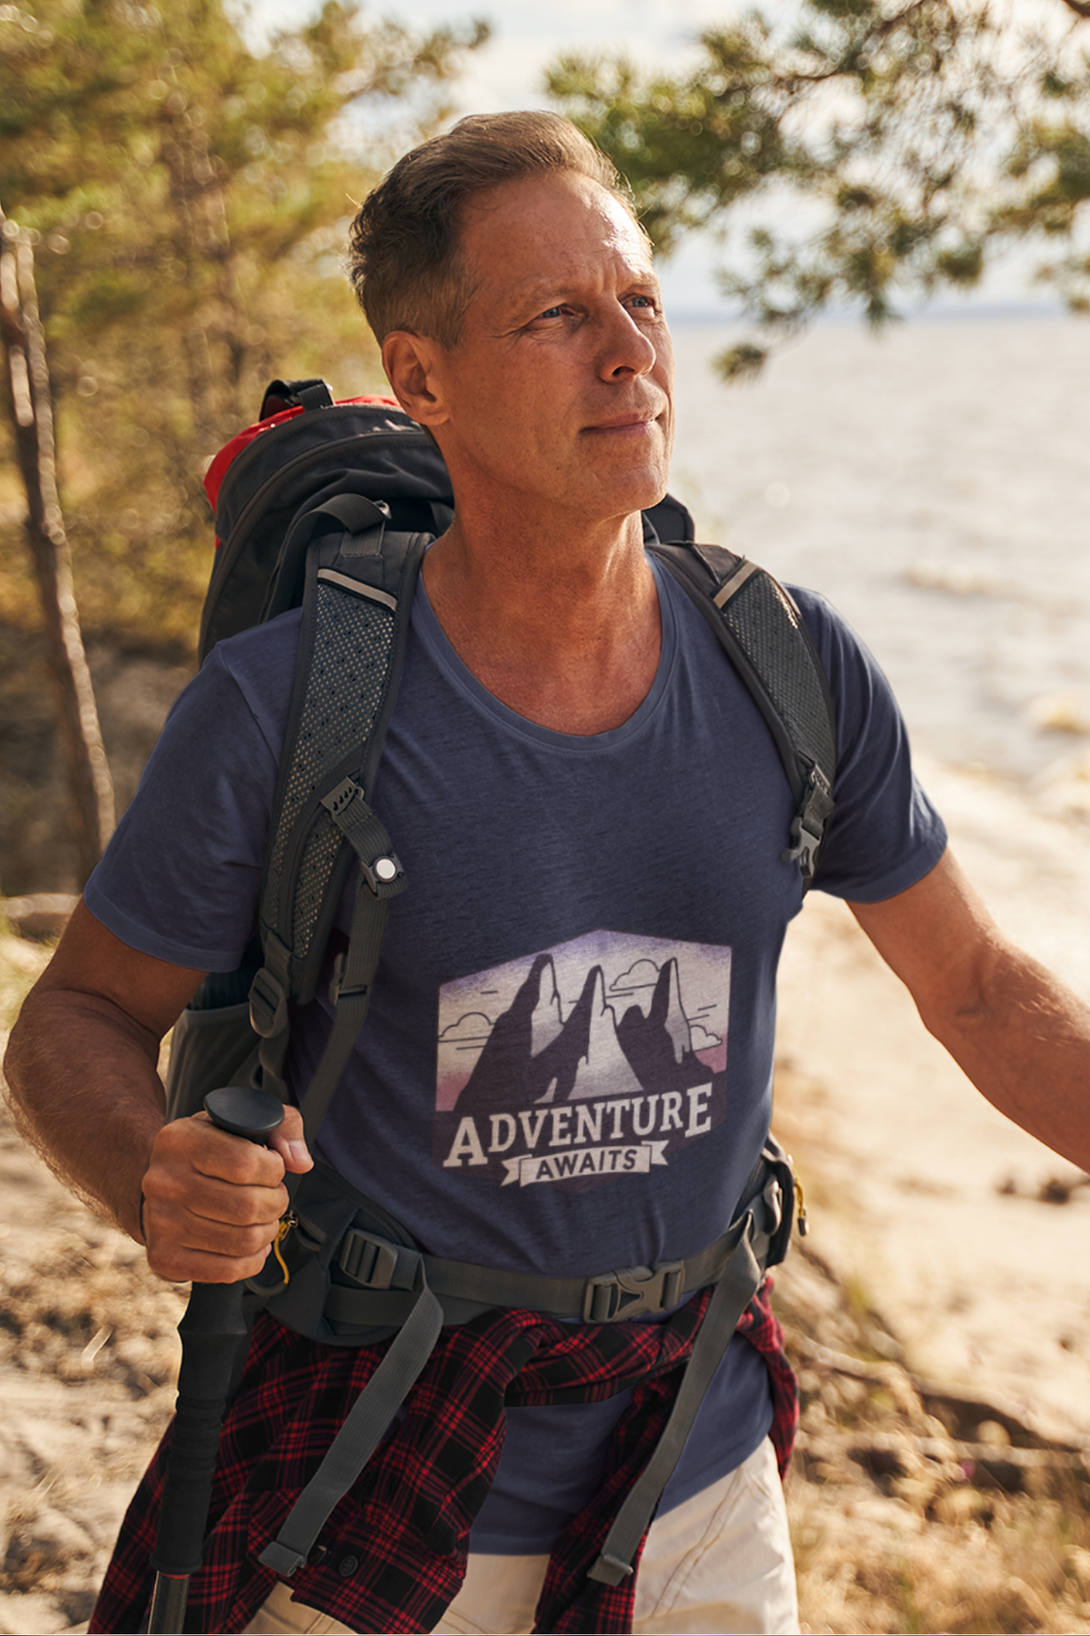 Adventure Awaits Printed T-Shirt For Men - WowWaves - 4